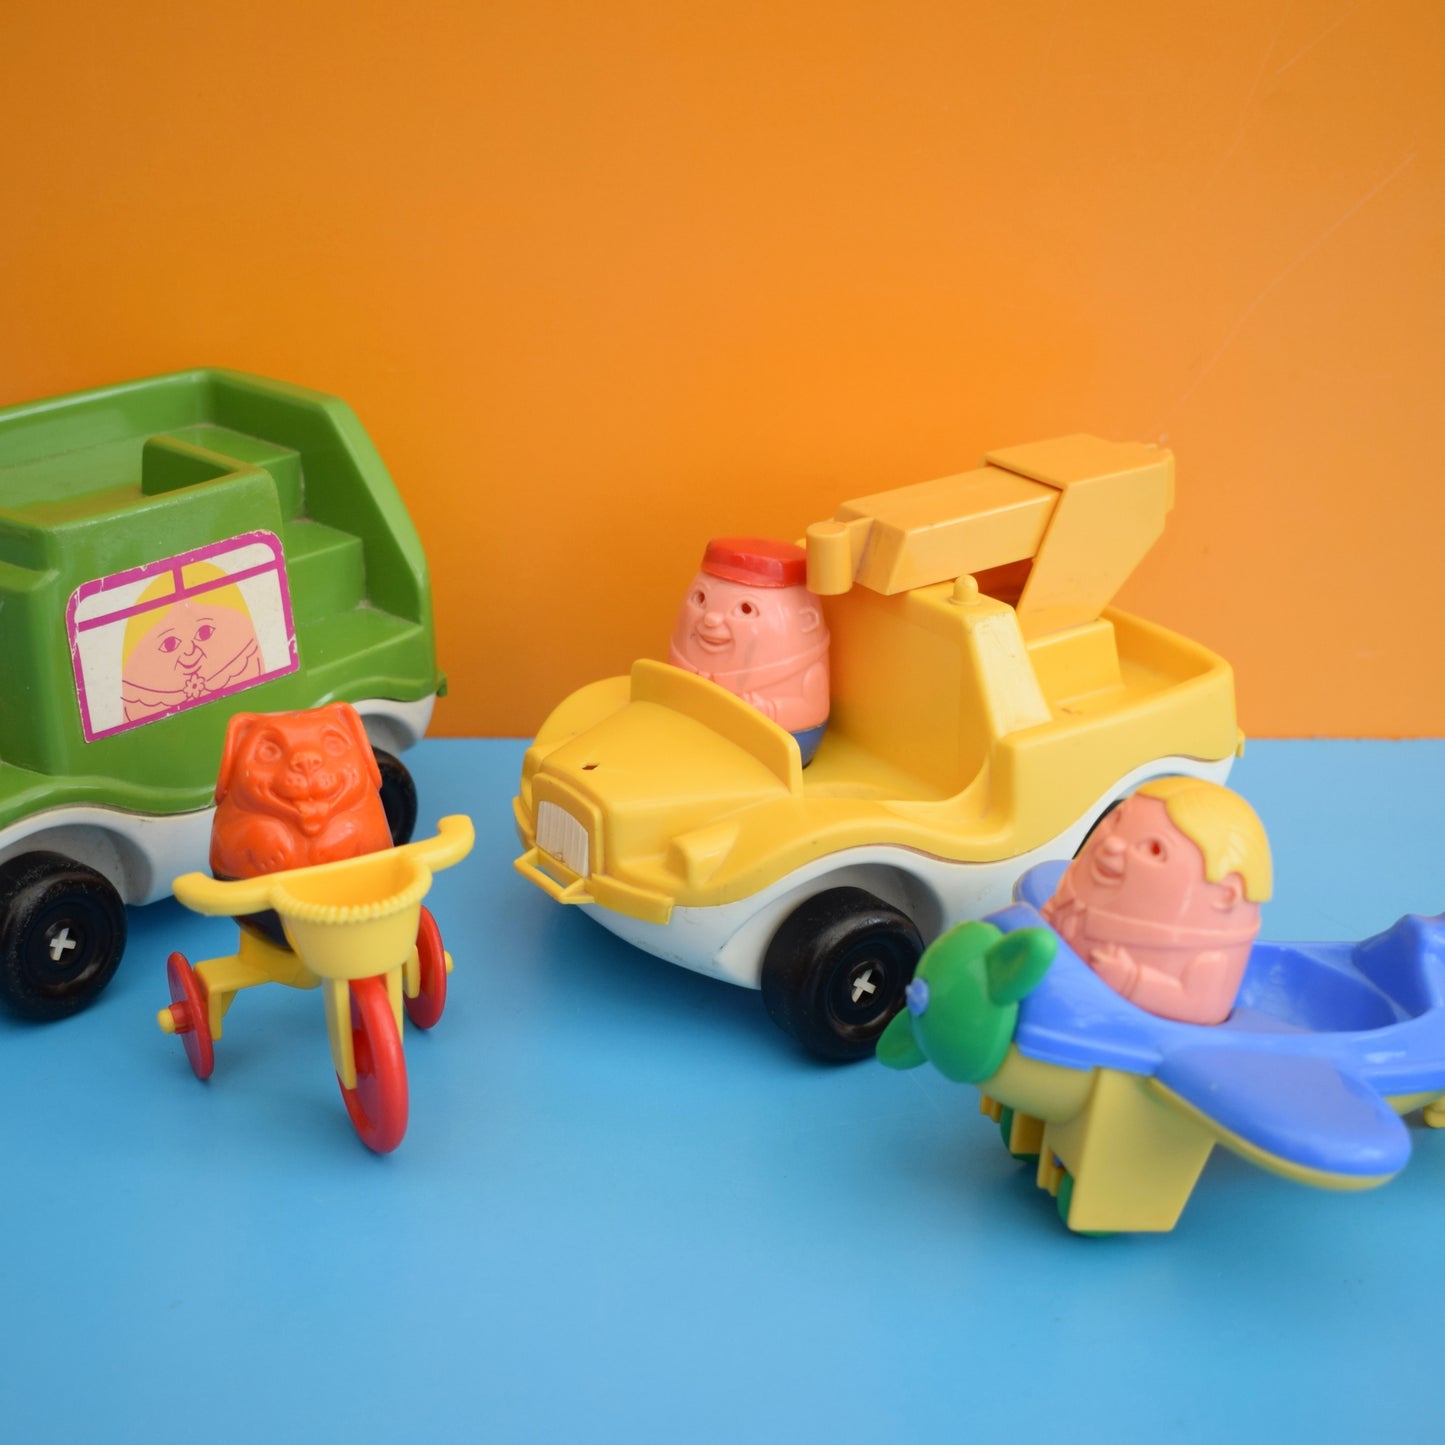 Vintage 1970s kitsch Plastic Weeble Toys / Figures